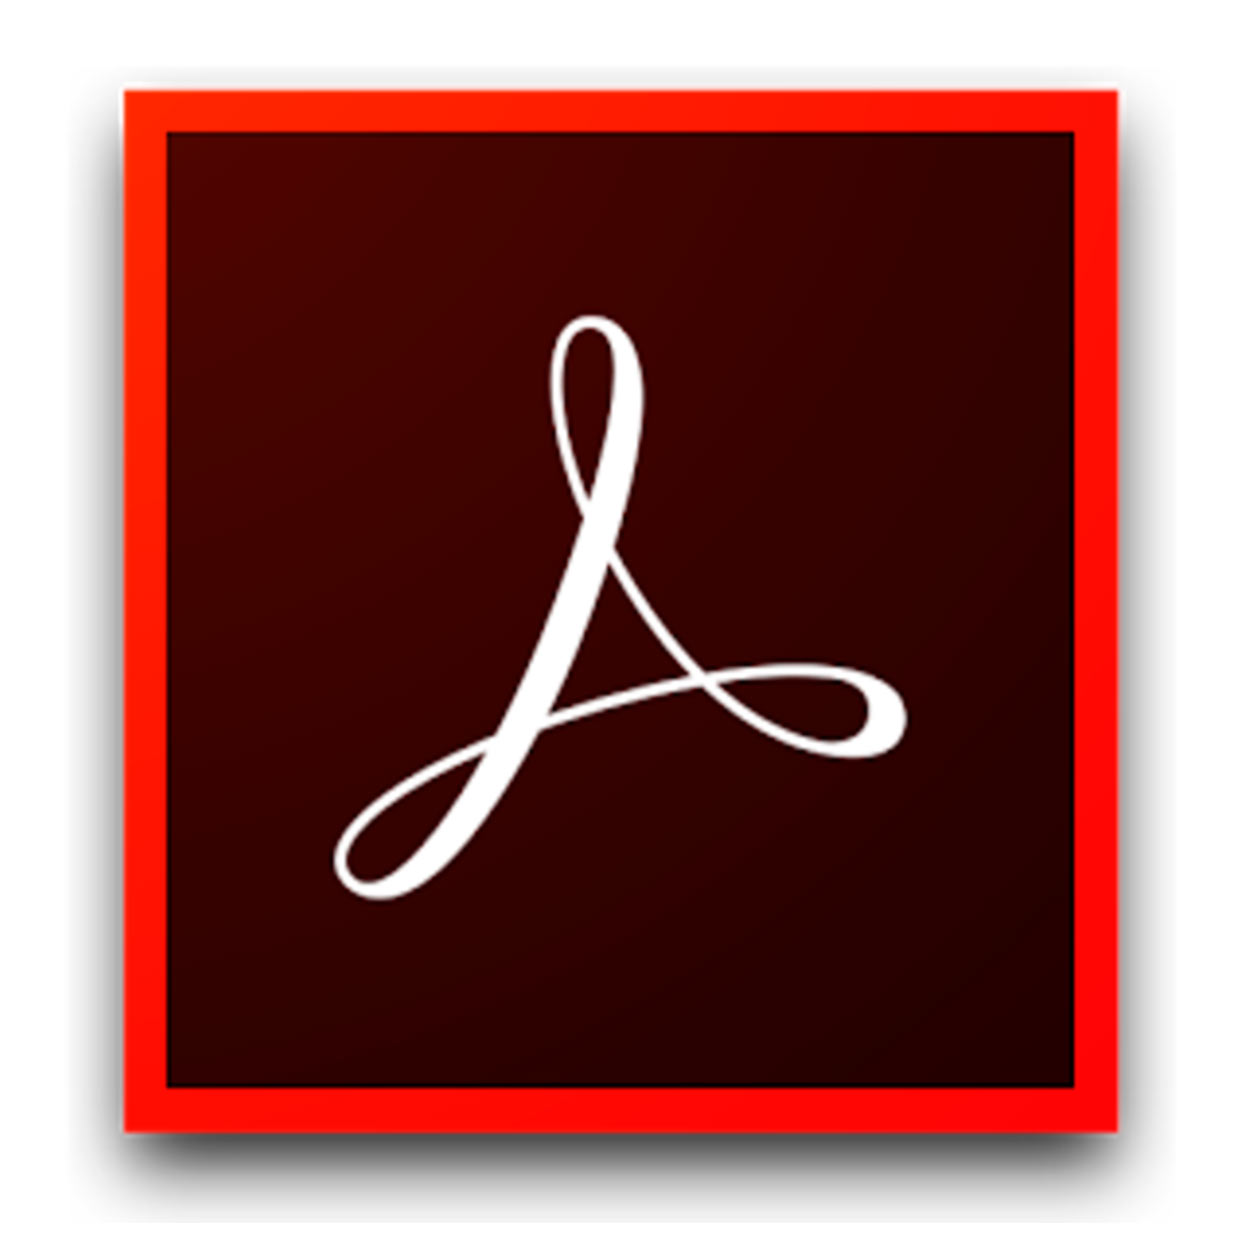 Adobe Acrobat Pro DC instal the new